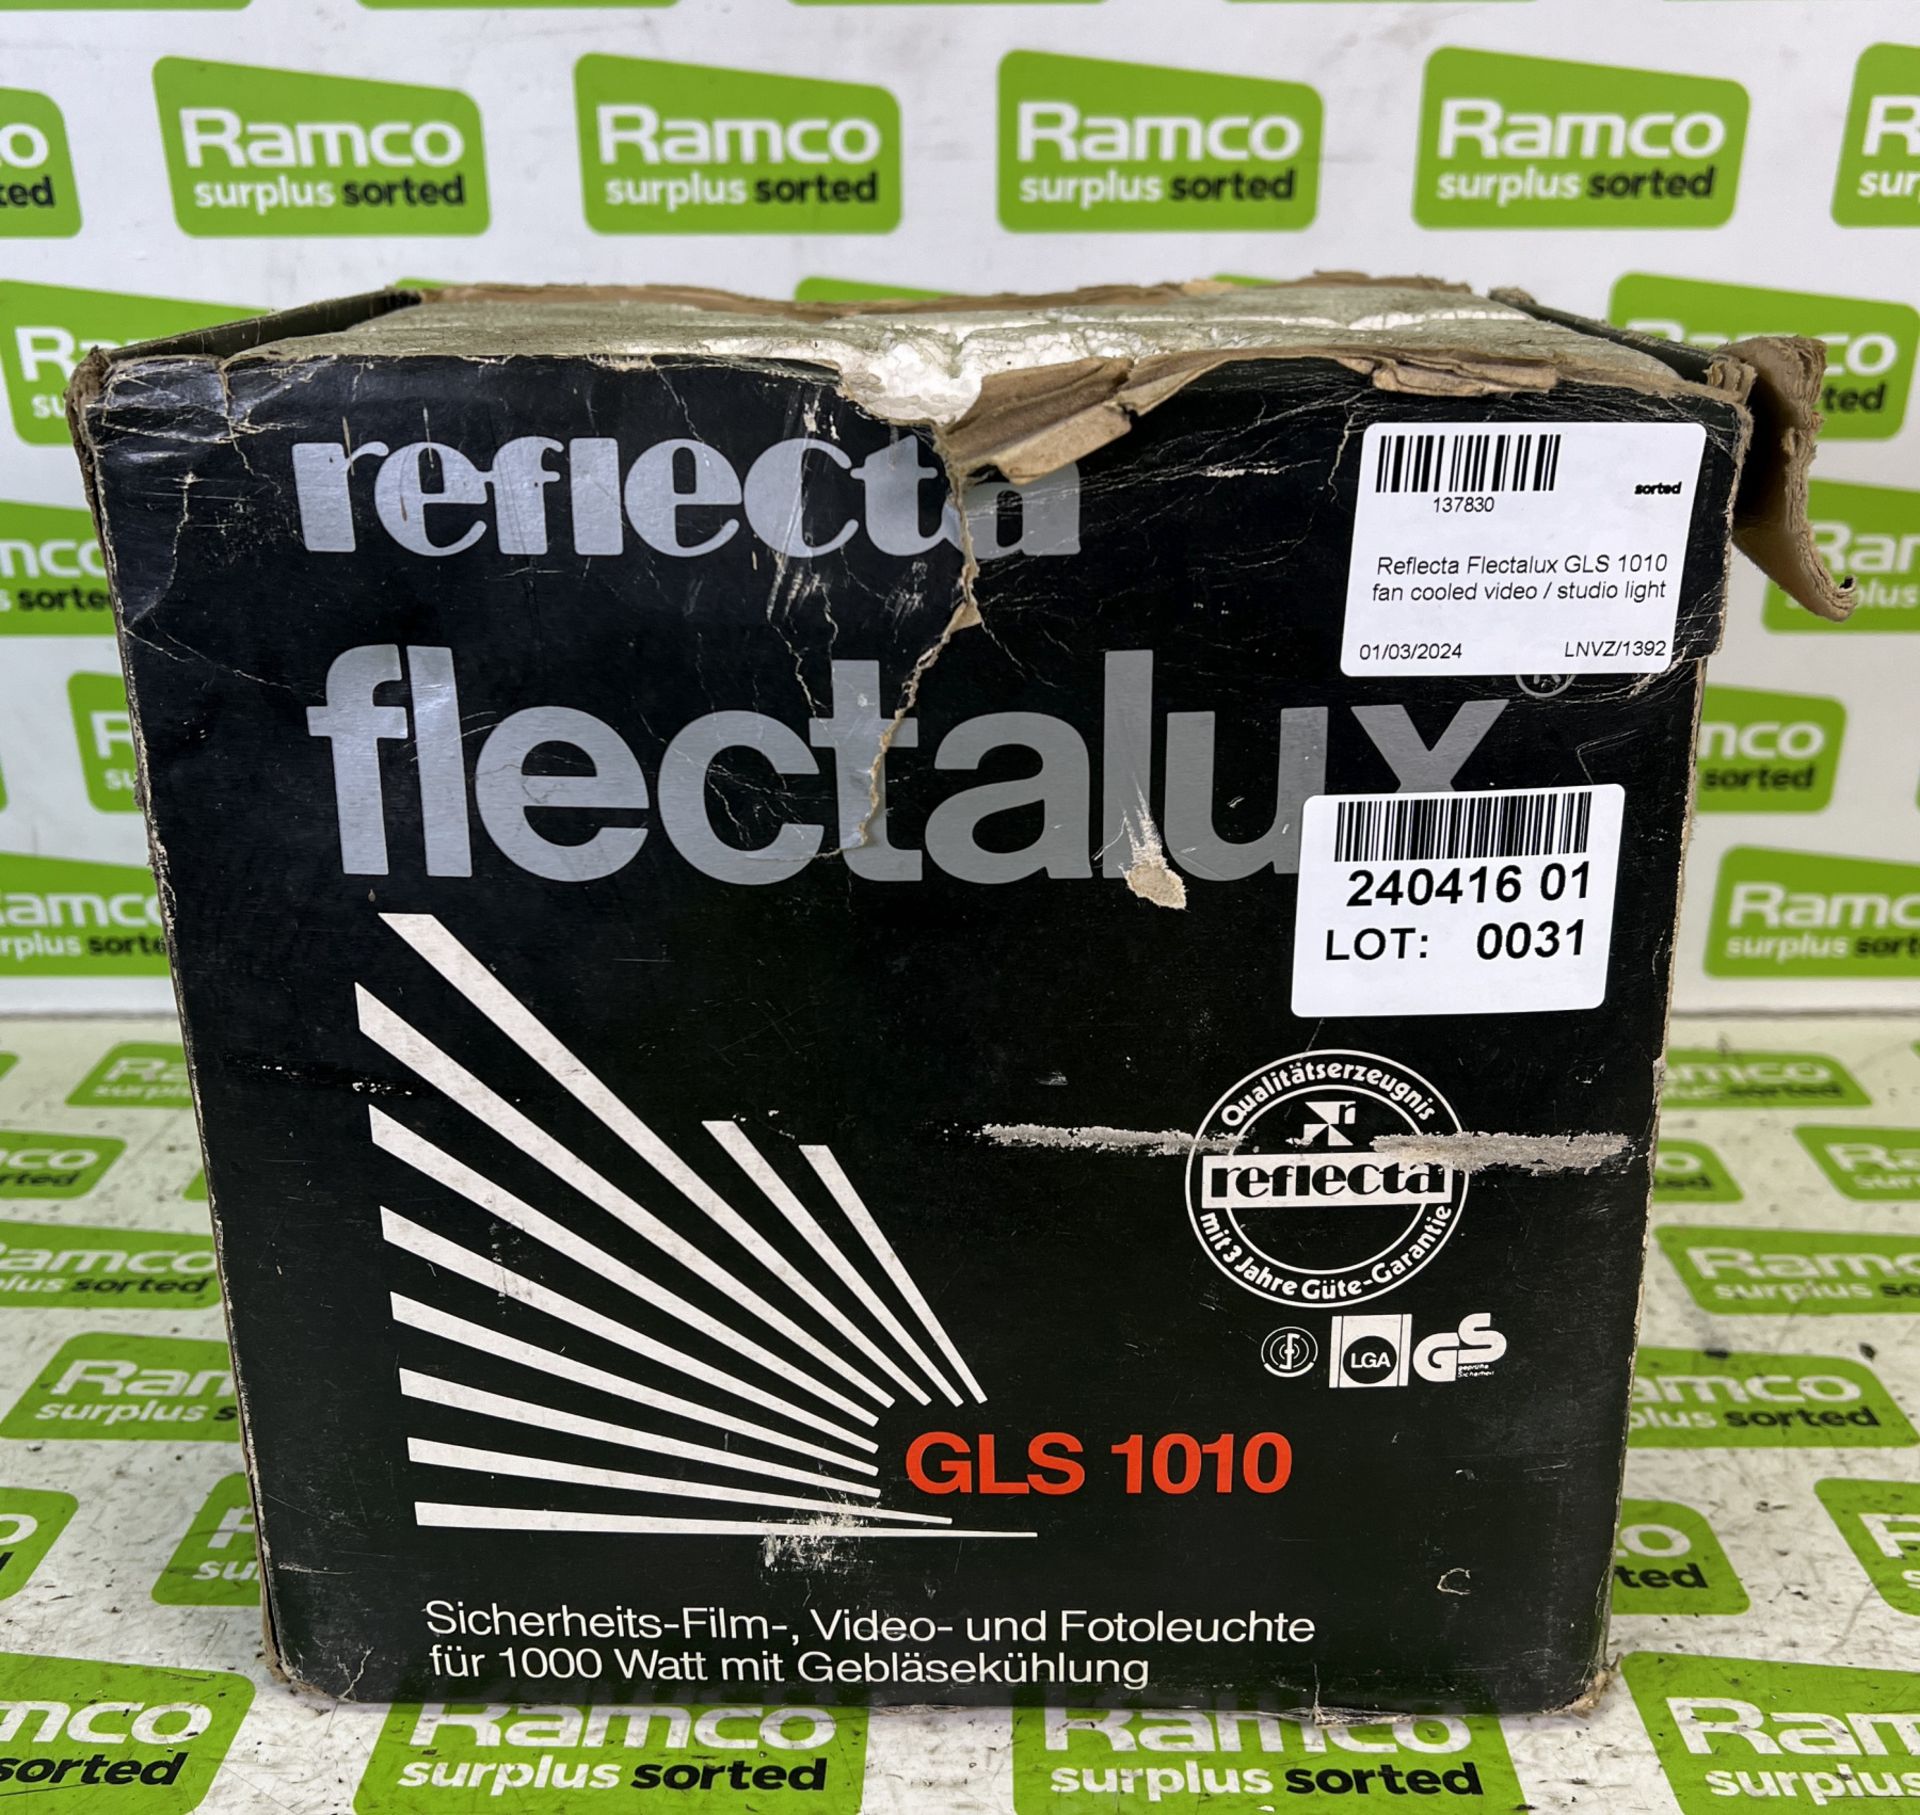 Reflecta Flectalux GLS 1010 fan cooled video / studio light